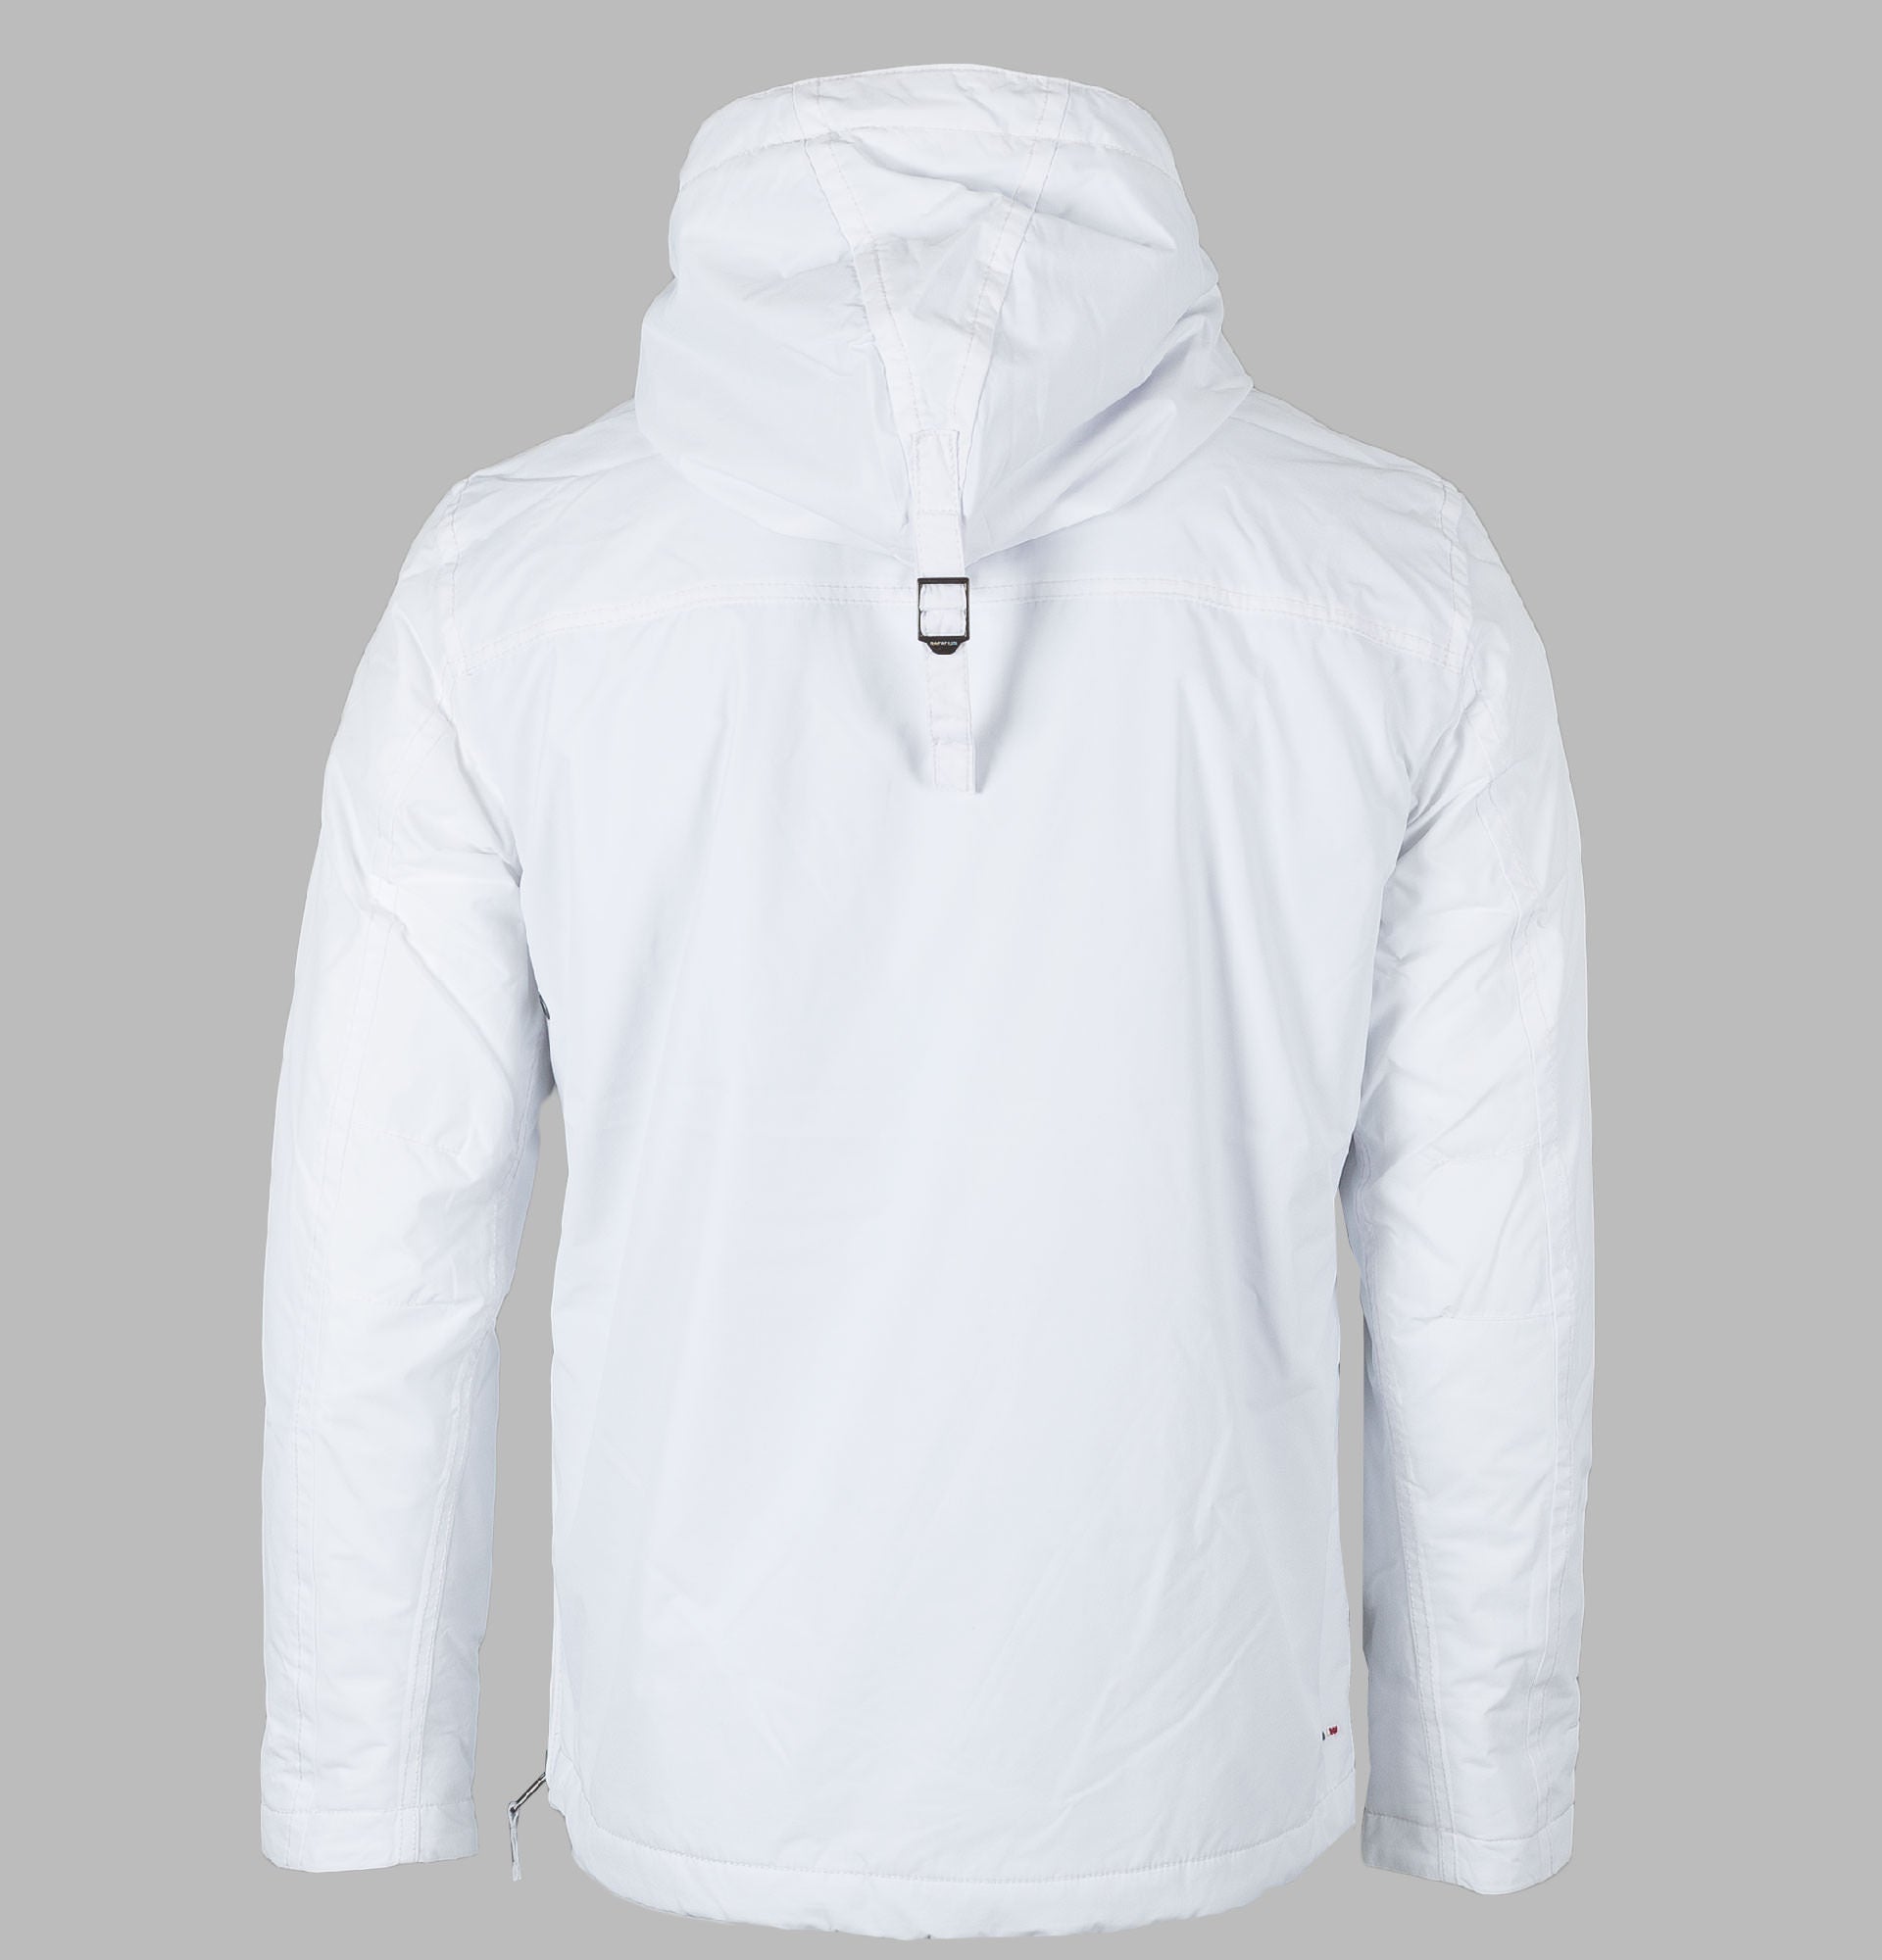 Napapijri Men's Rainforest Winter Waterproof Jacket White